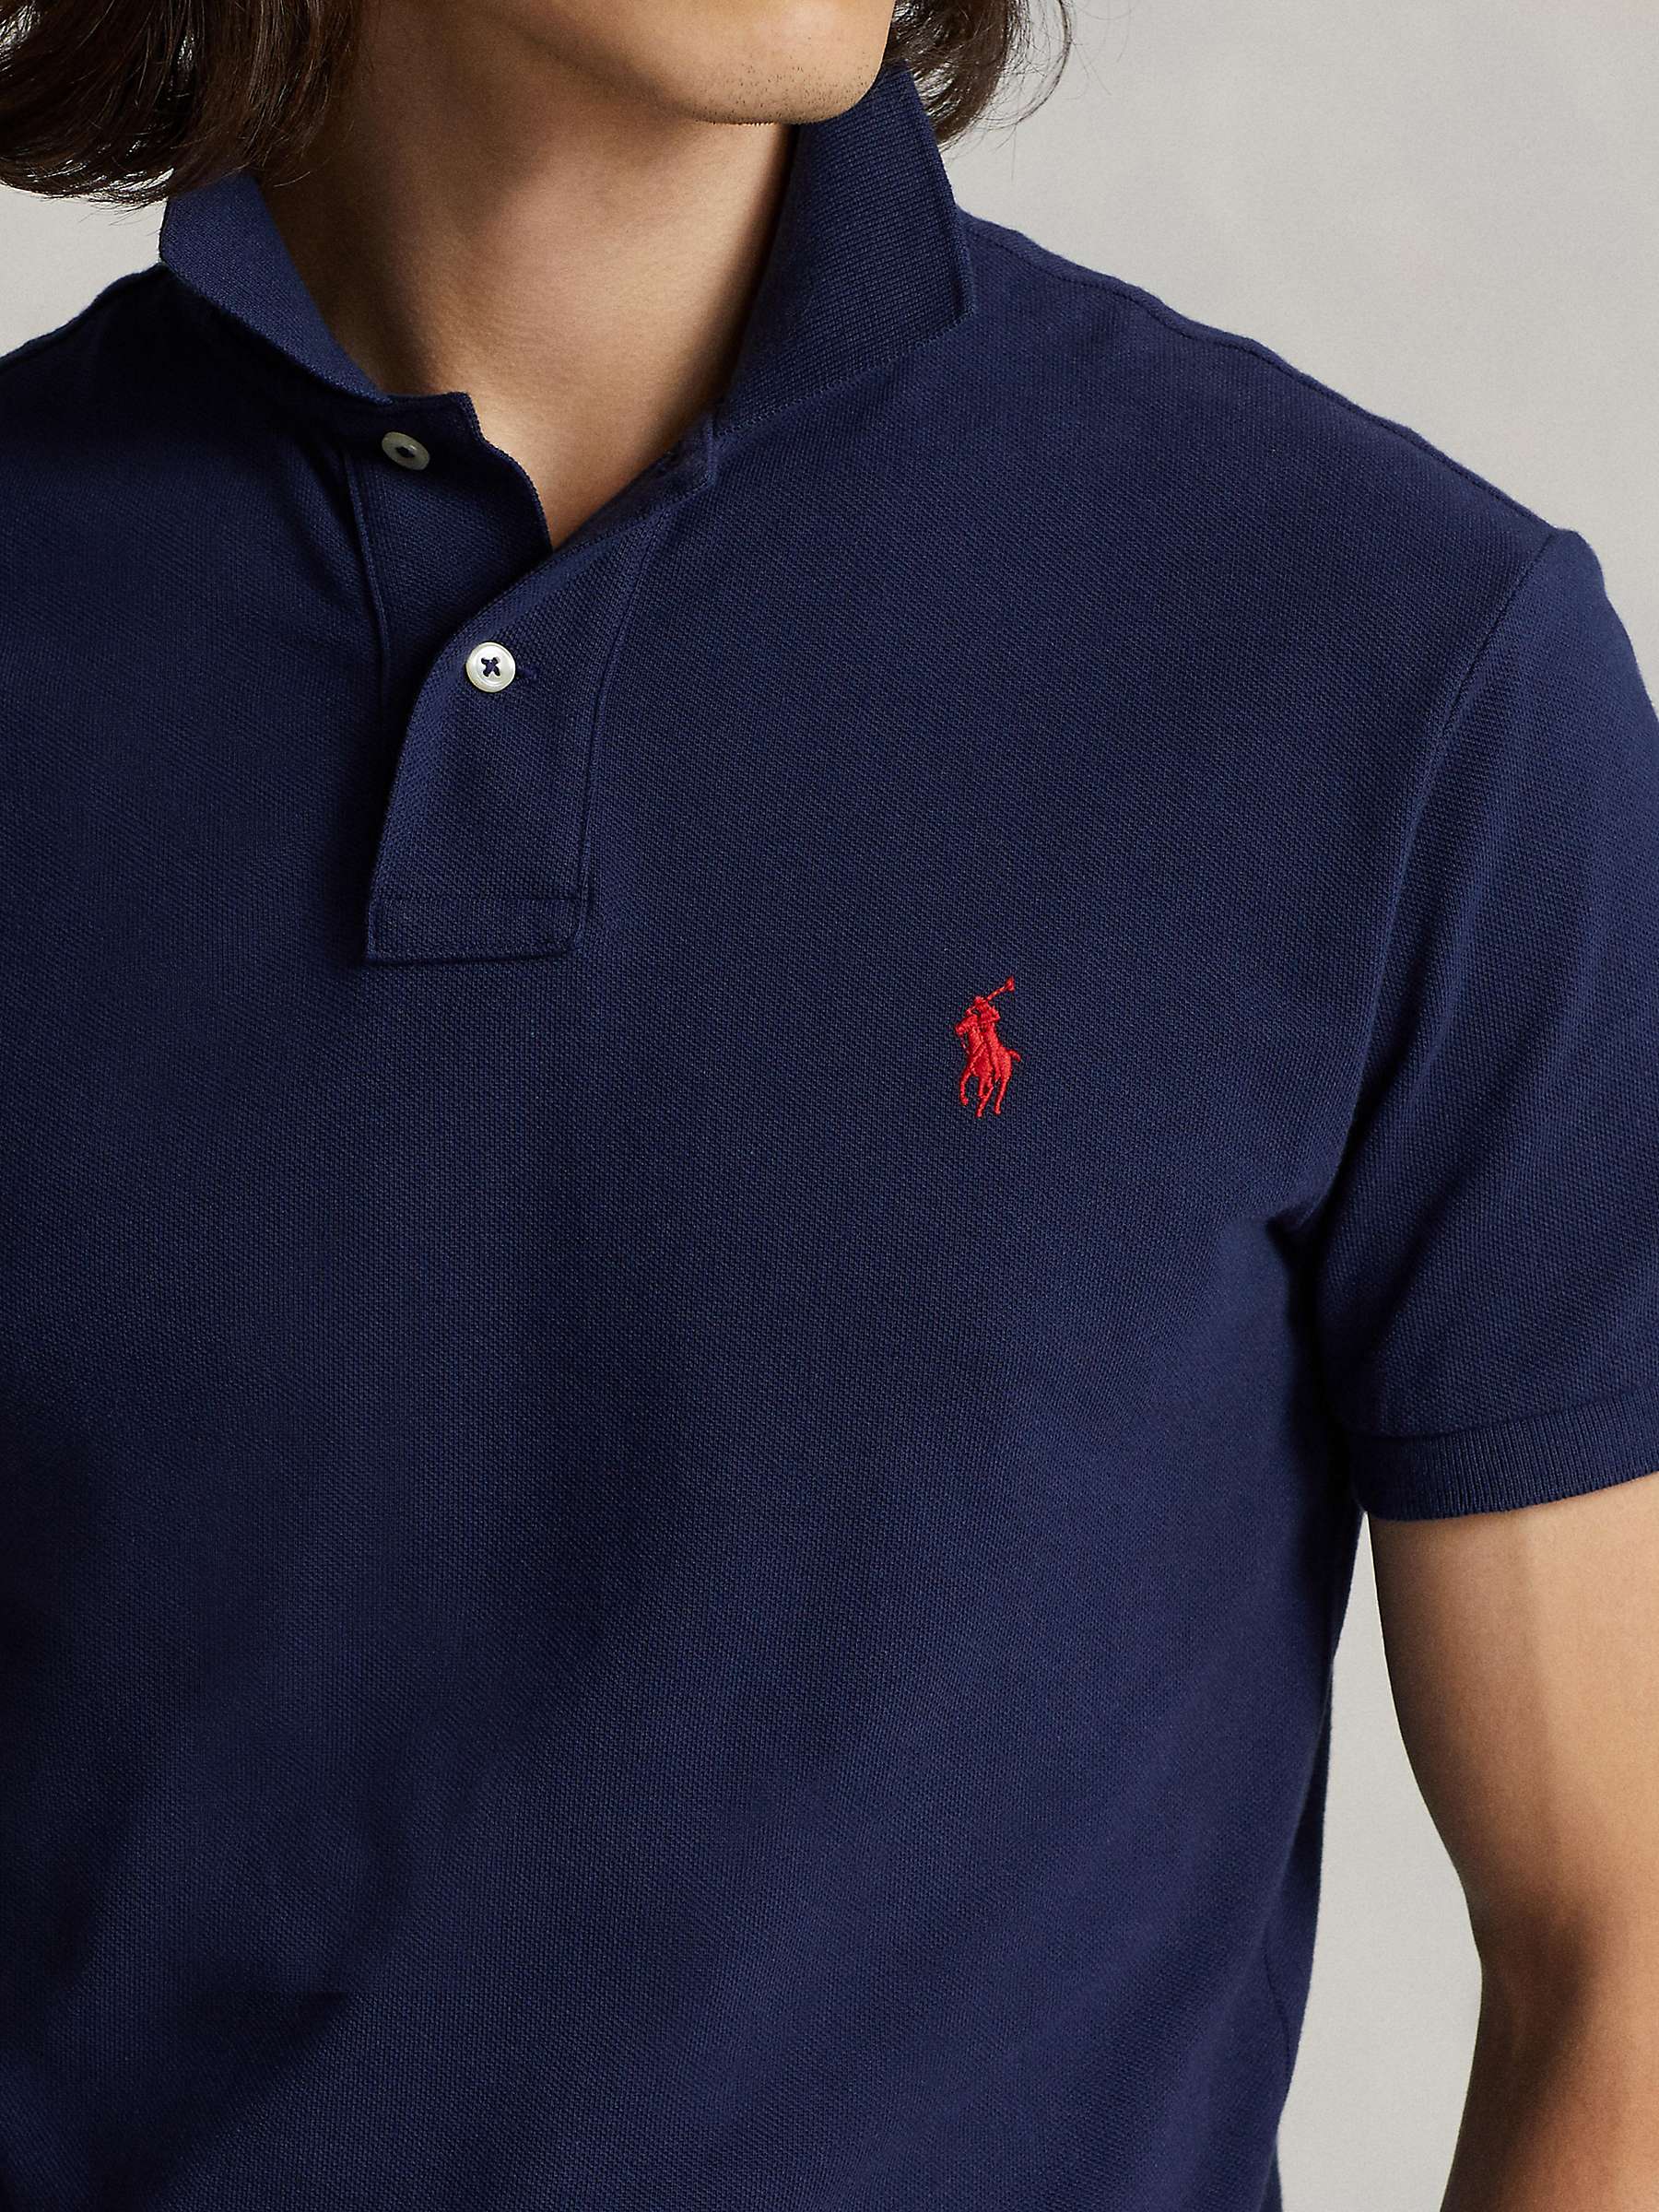 Buy Polo Ralph Lauren Slim Fit Mesh Polo Shirt, Newport Navy Online at johnlewis.com